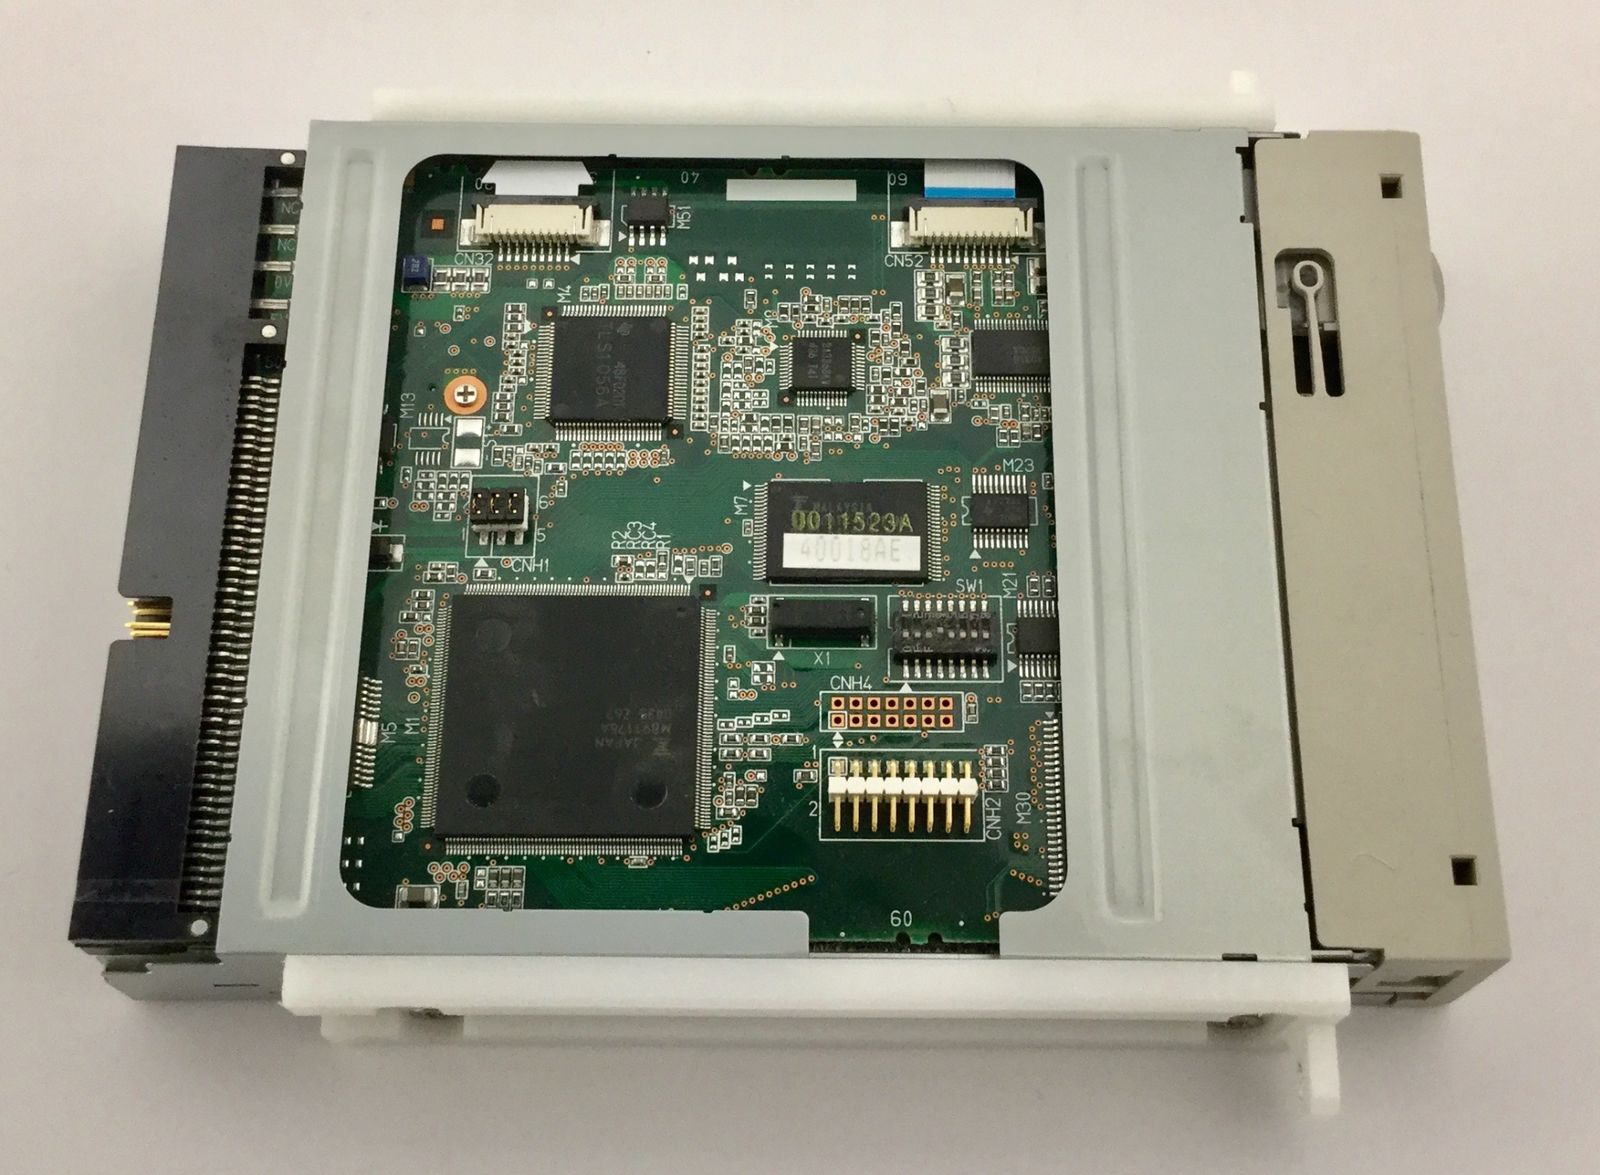 Toshiba SSA-770A Ultrasound CA06363-B441 Optical Drive DIAGNOSTIC ULTRASOUND MACHINES FOR SALE